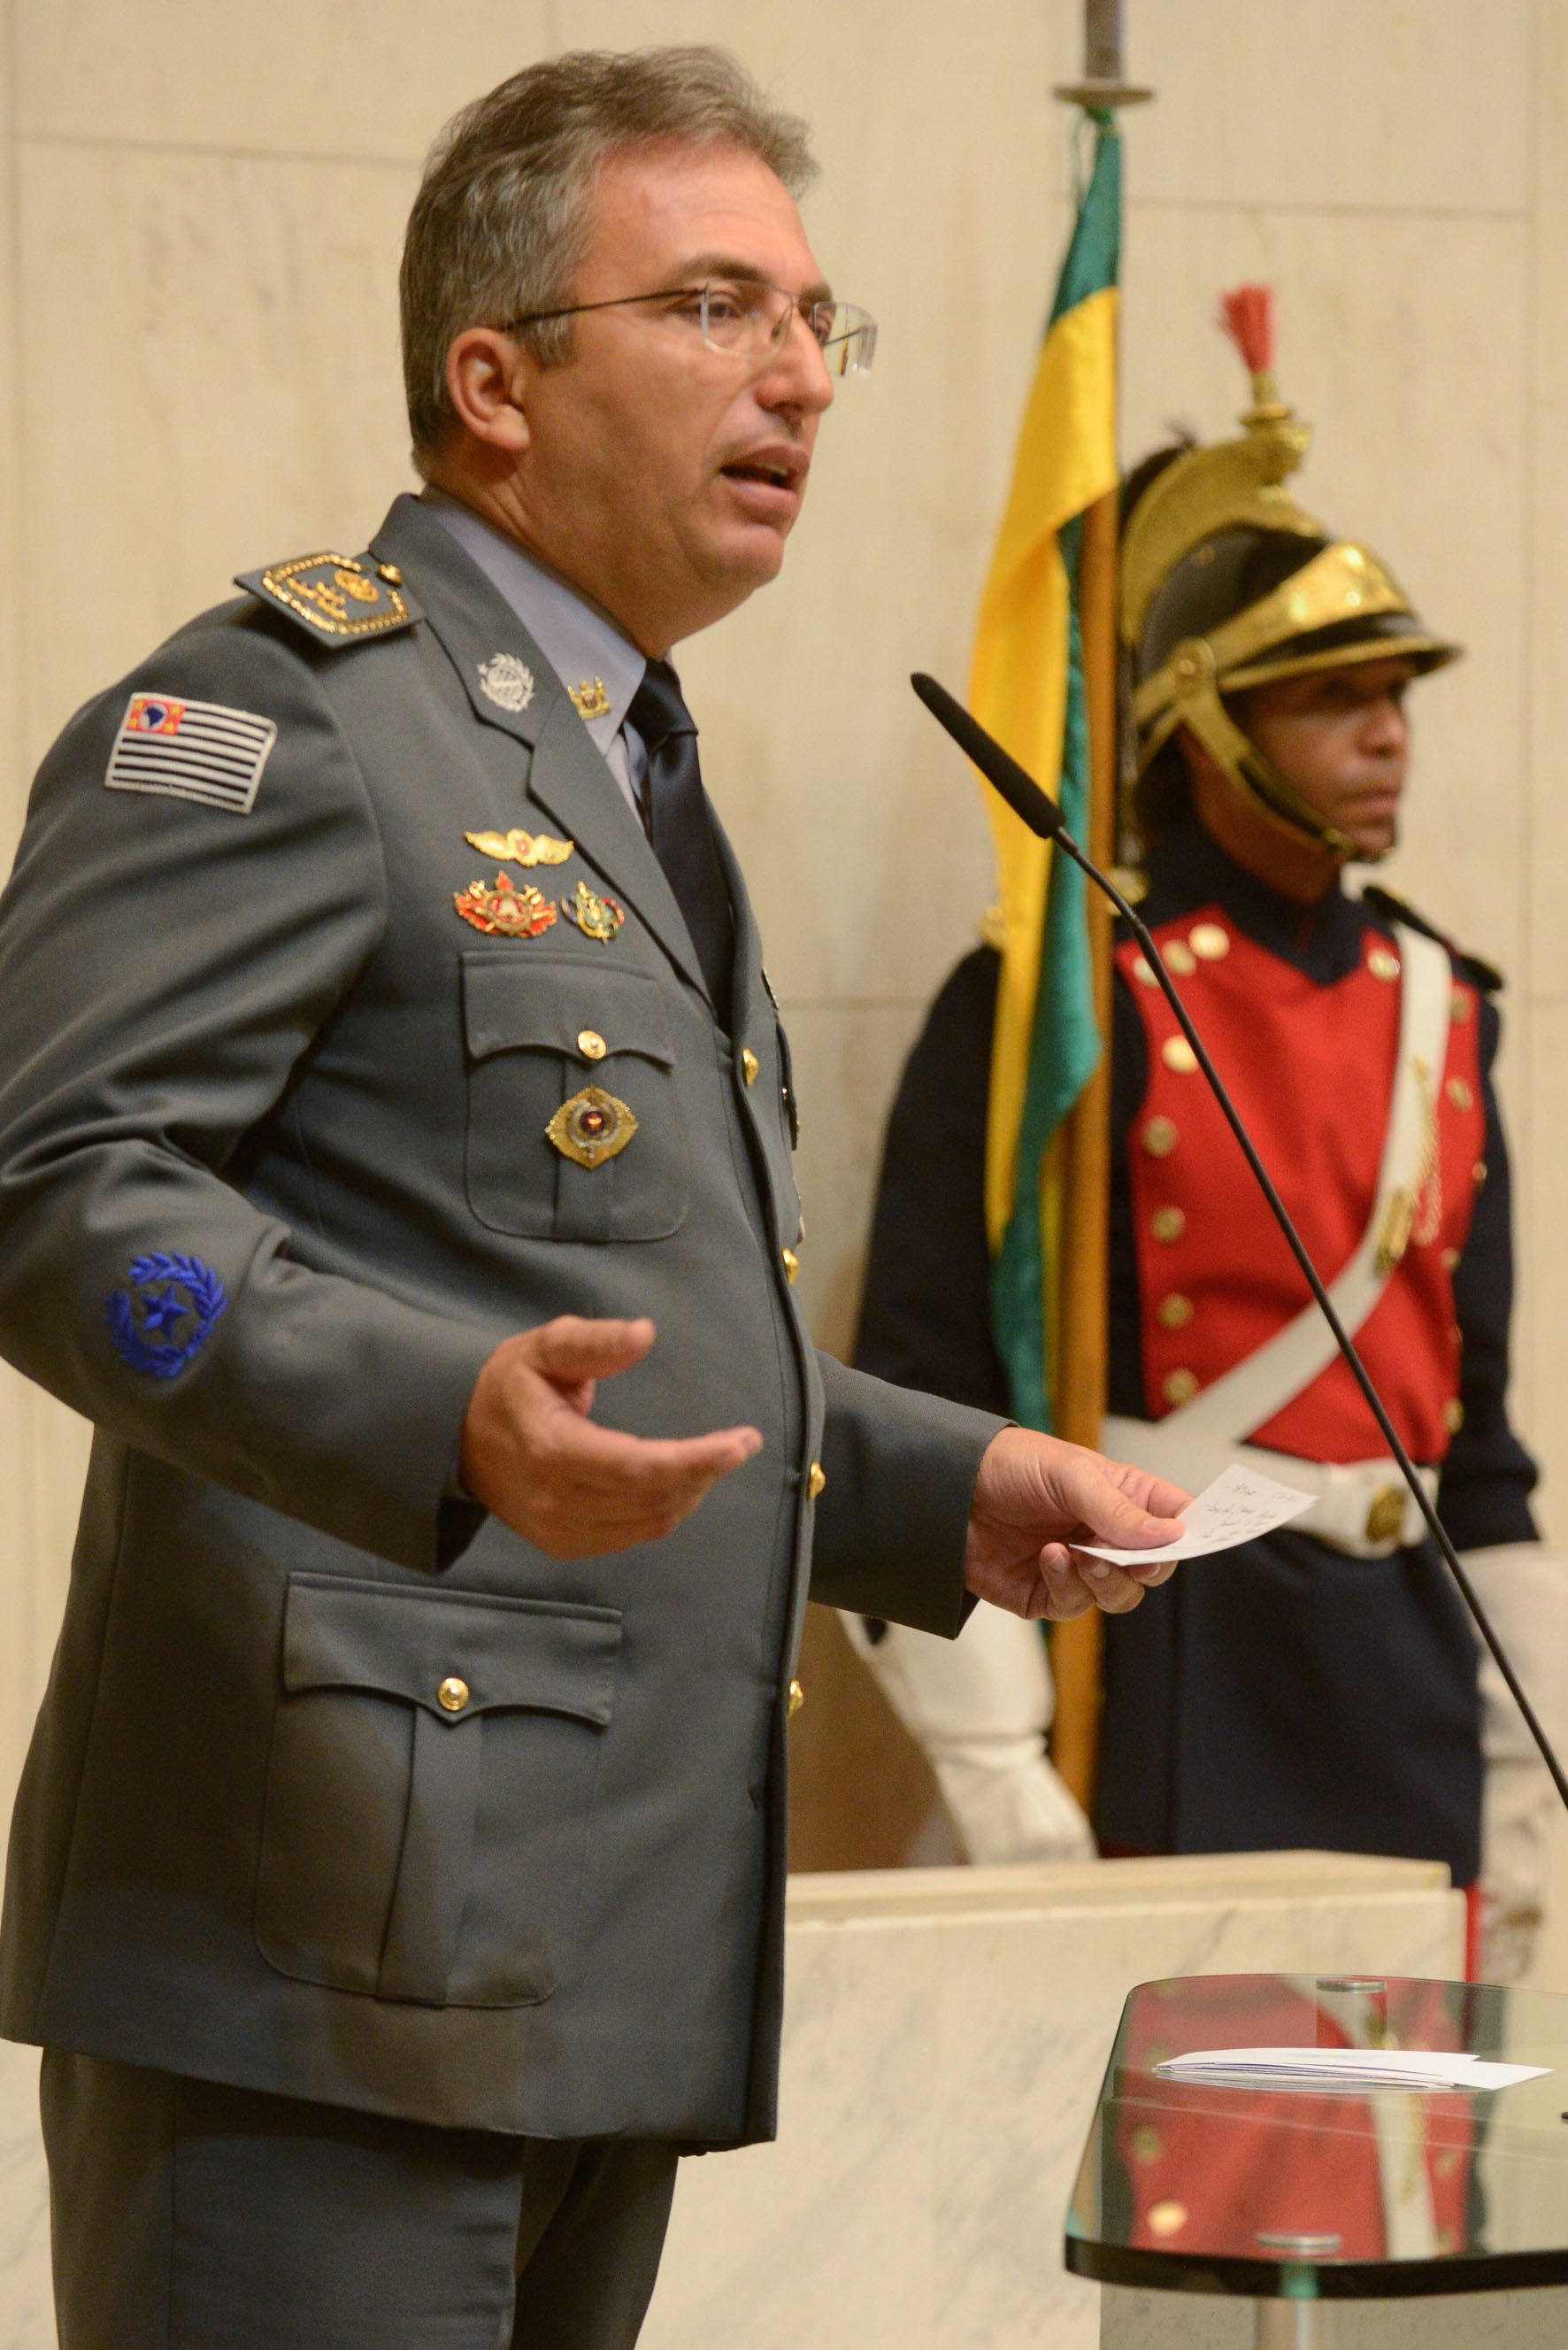 Ricardo Gambaroni, Comandante Geral da Polcia Militar do Estado de So Paulo <a style='float:right;color:#ccc' href='https://www3.al.sp.gov.br/repositorio/noticia/N-12-2016/fg197550.jpg' target=_blank><i class='bi bi-zoom-in'></i> Clique para ver a imagem </a>